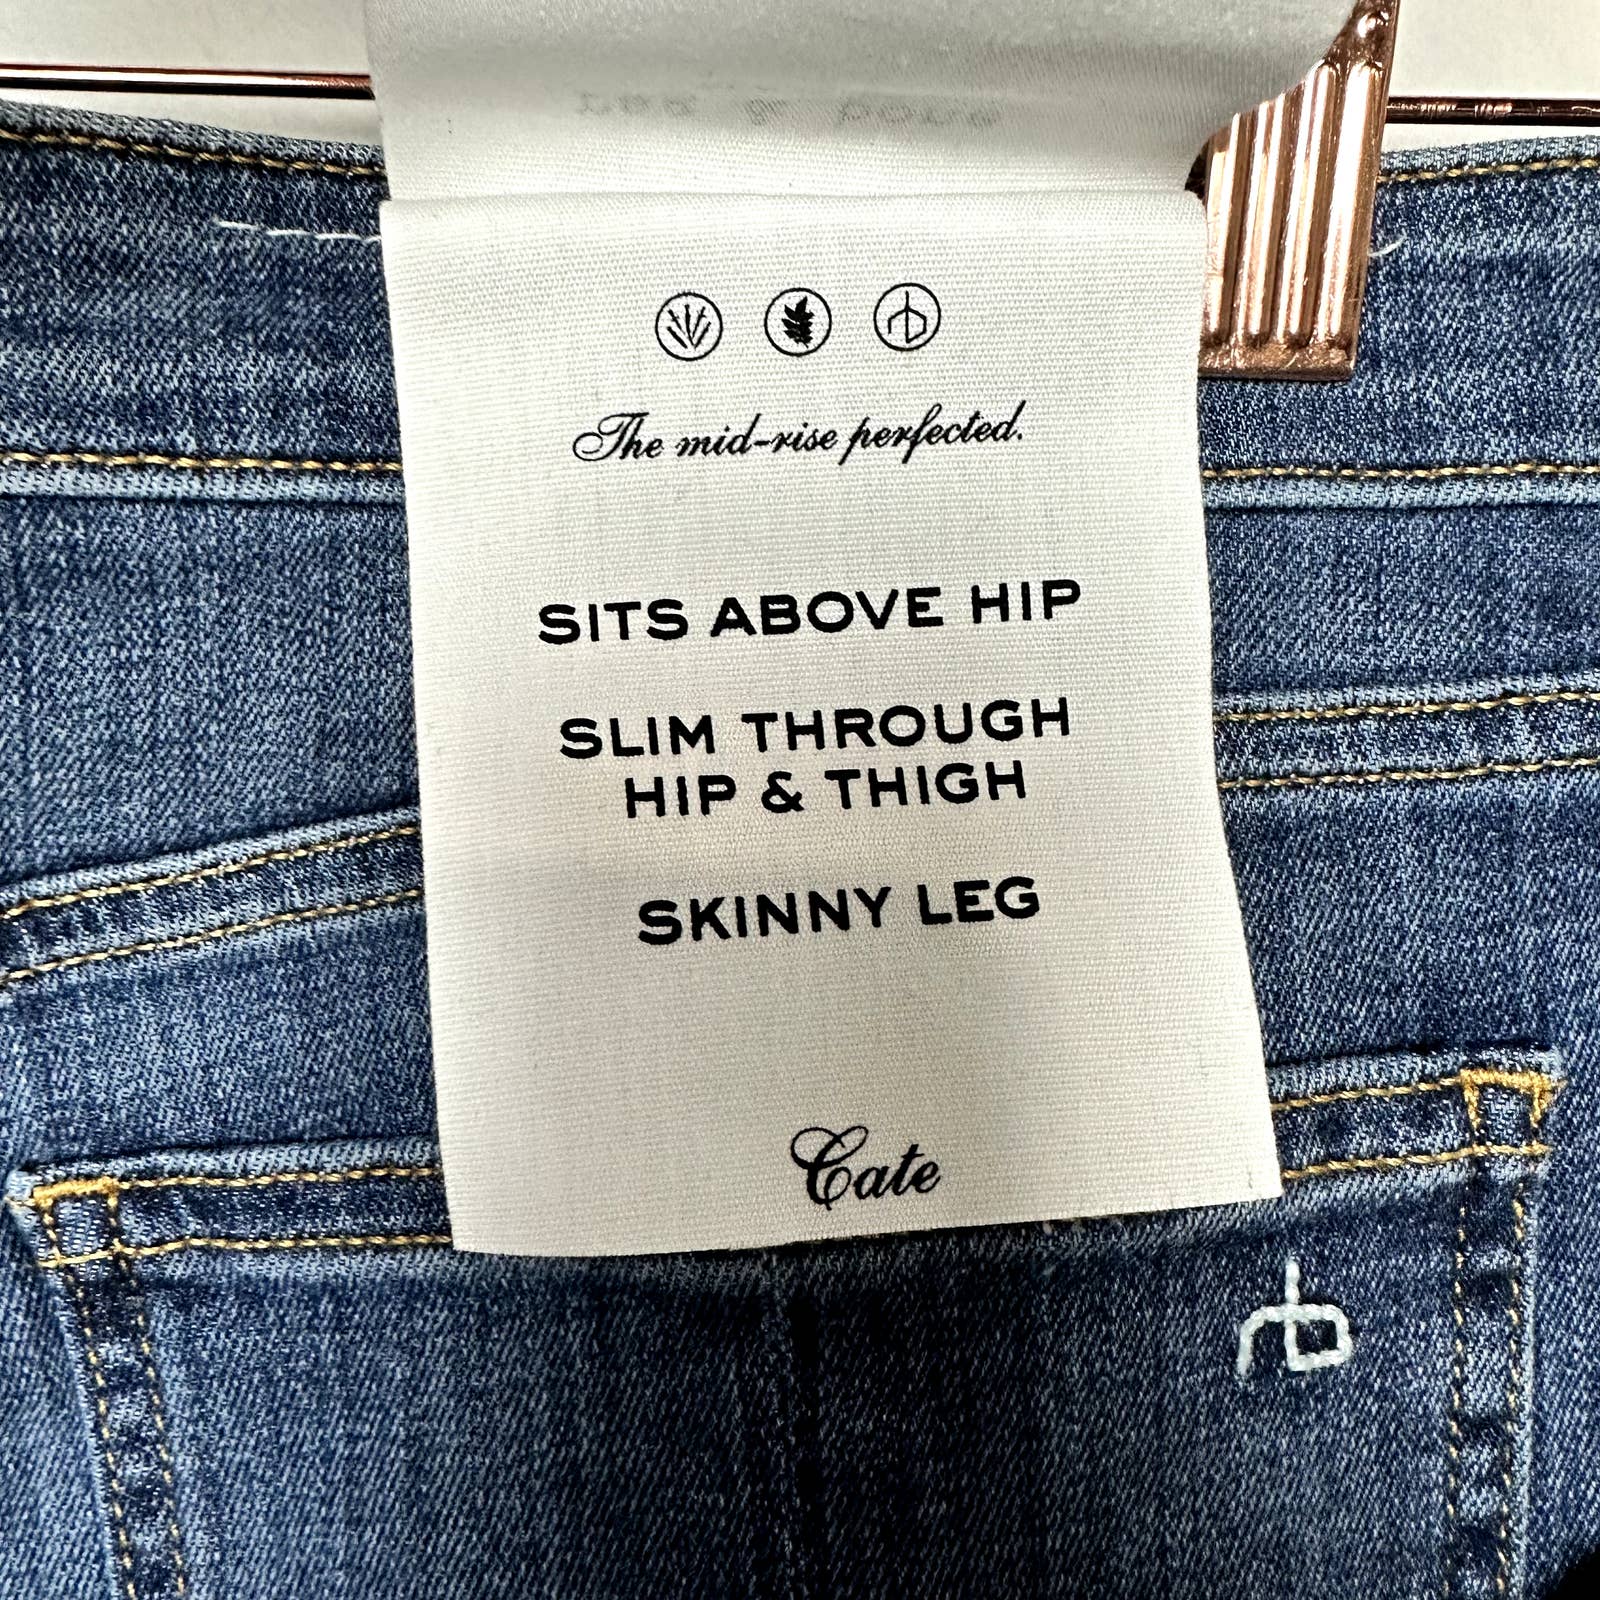 rag & bone NWT Cate Midi-Rise Classic Ankle Raw Hem Skinny Jeans Juni Size 29